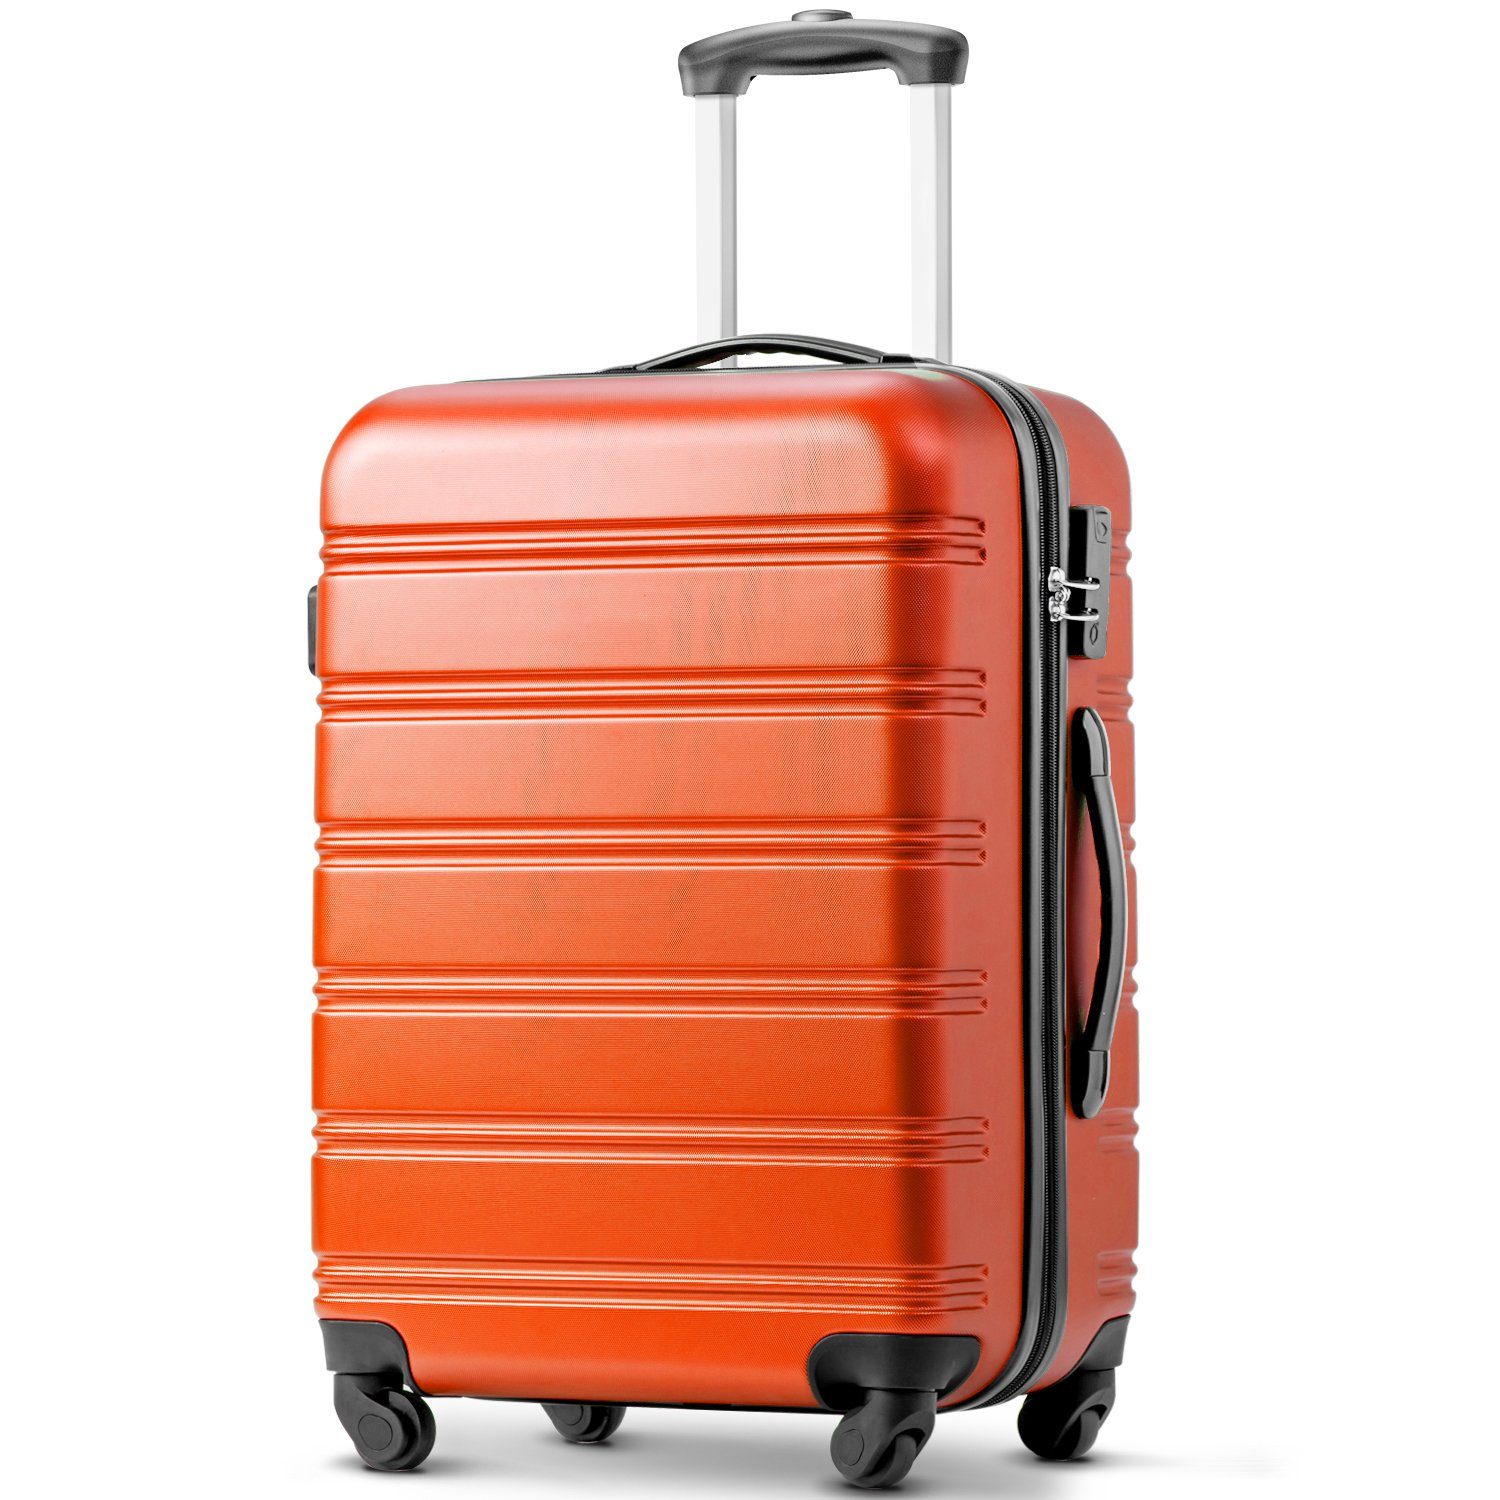 Flieks Hartschalen-Trolley, 4 Rollen, Hartschalenkoffer Handgepäck Trolley Reisekoffer, ABS-Material Orange